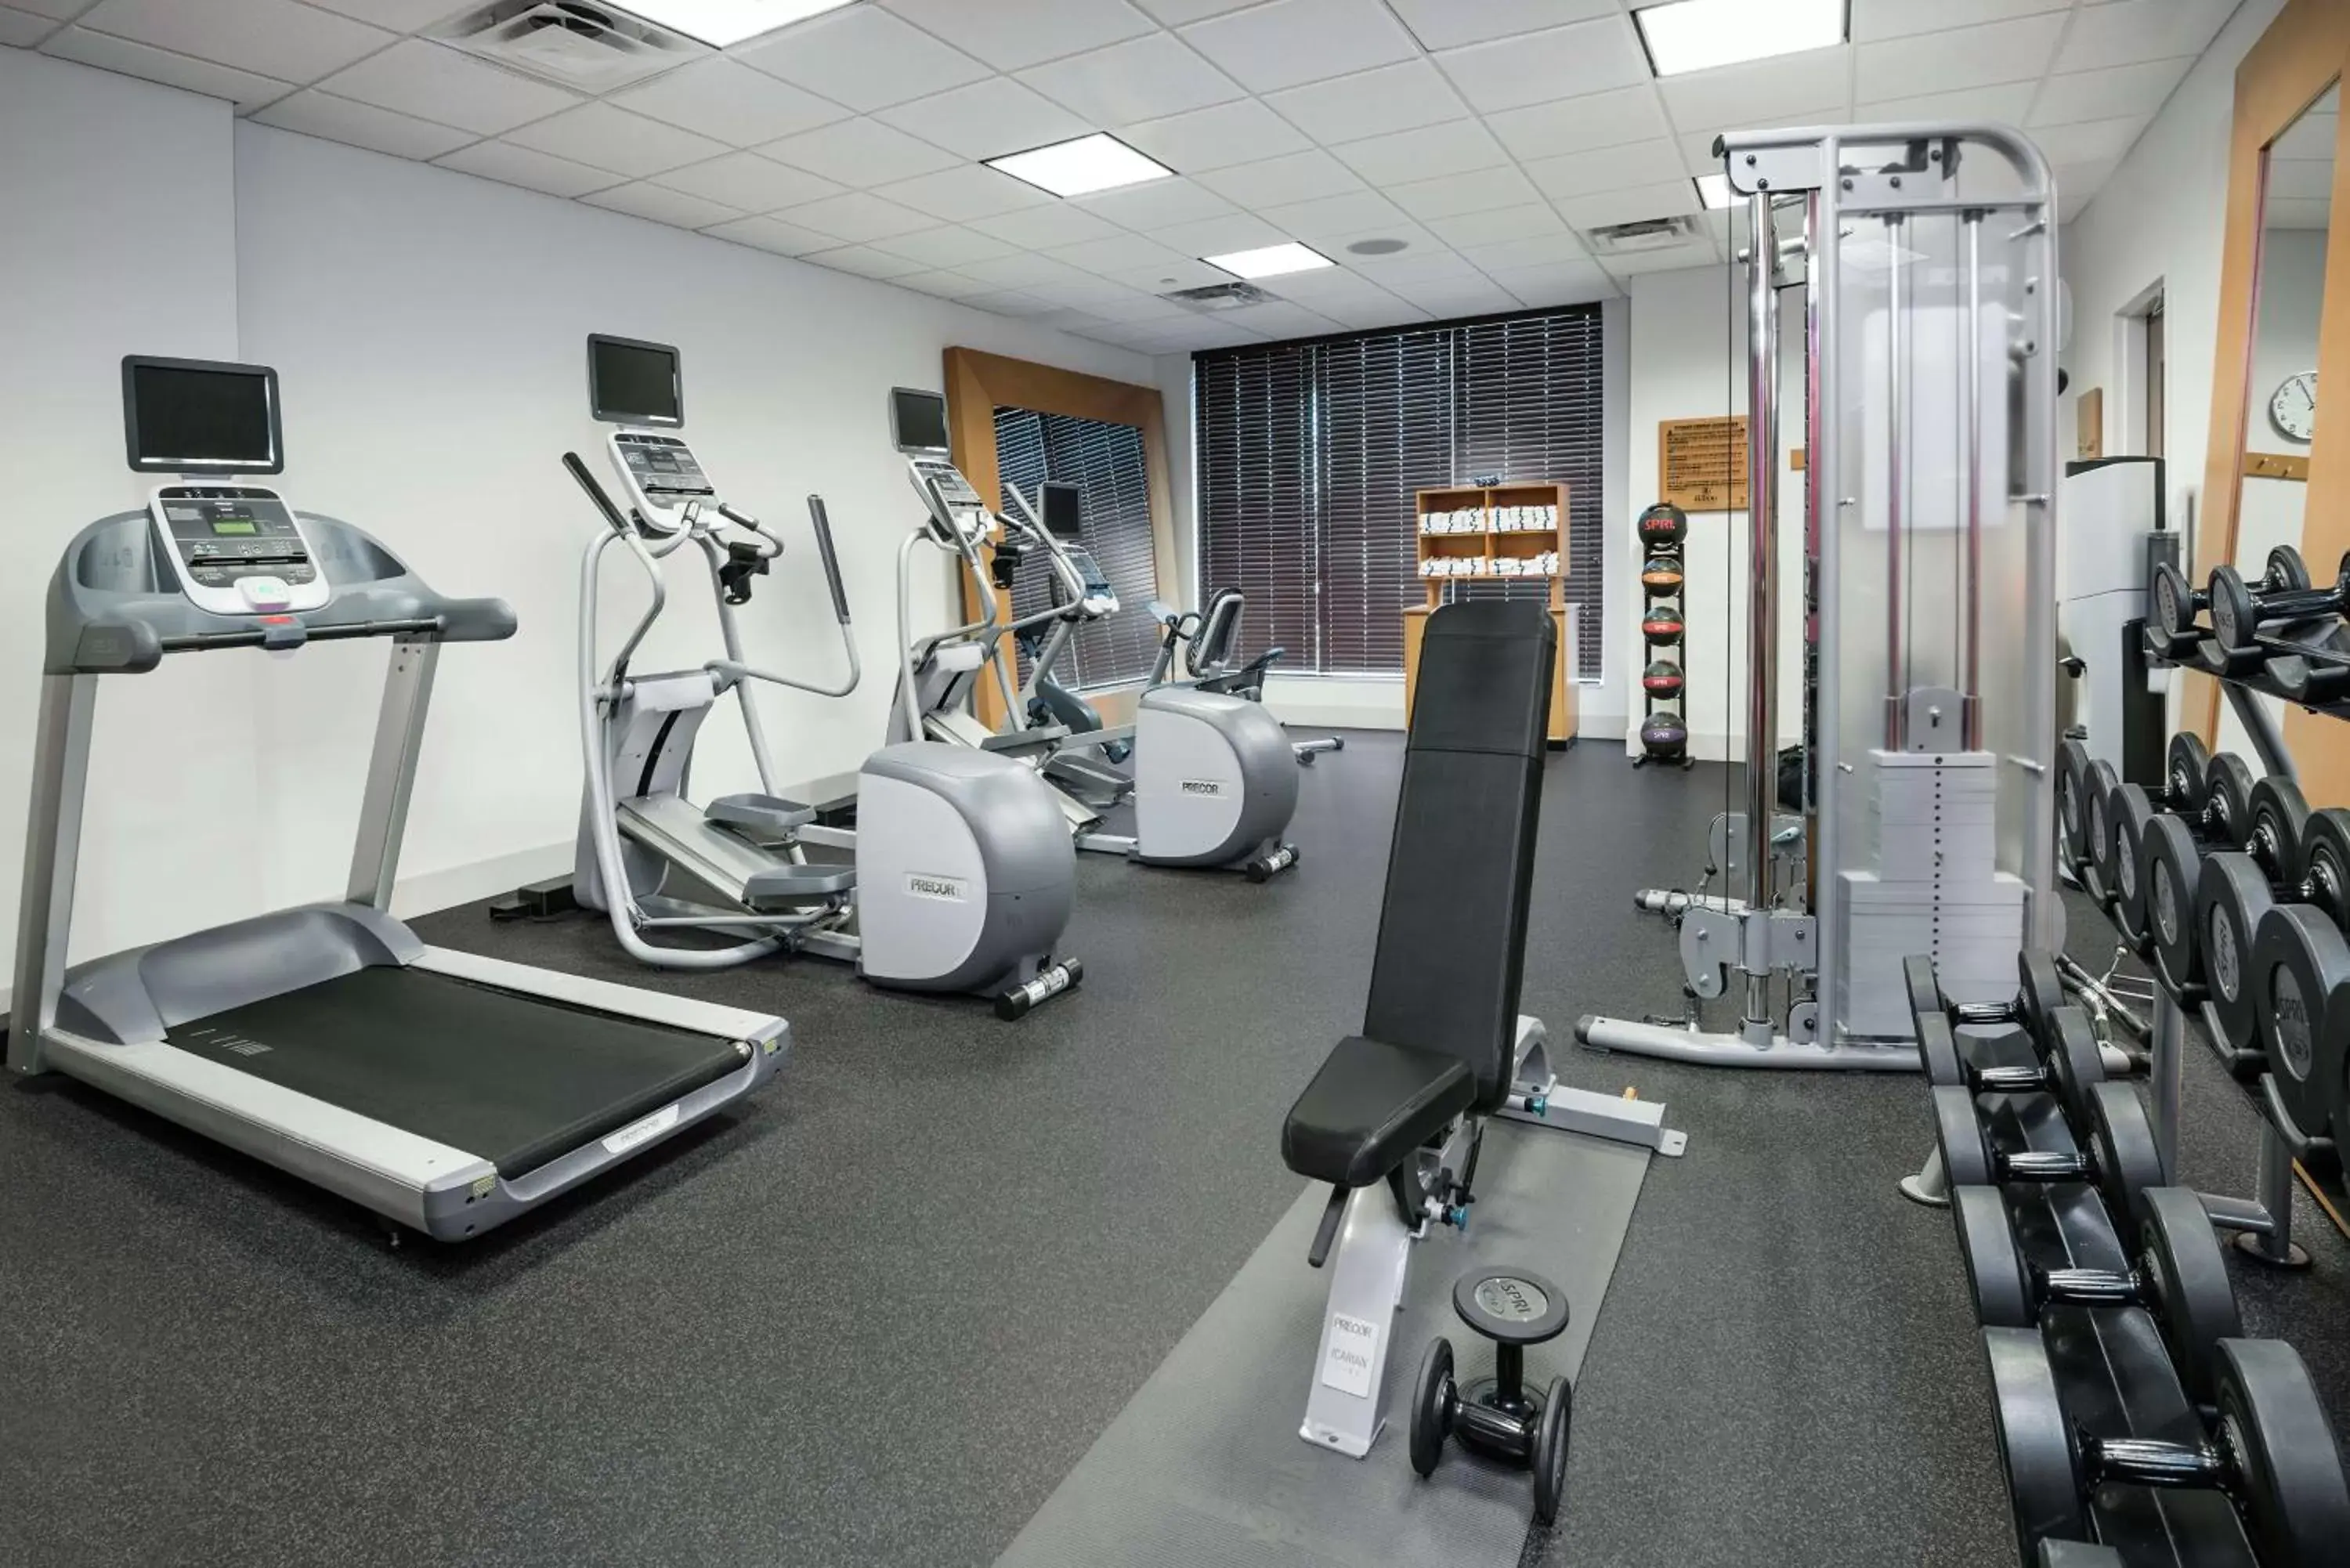 Fitness centre/facilities, Fitness Center/Facilities in Hilton Garden Inn San Antonio/Rim Pass Drive